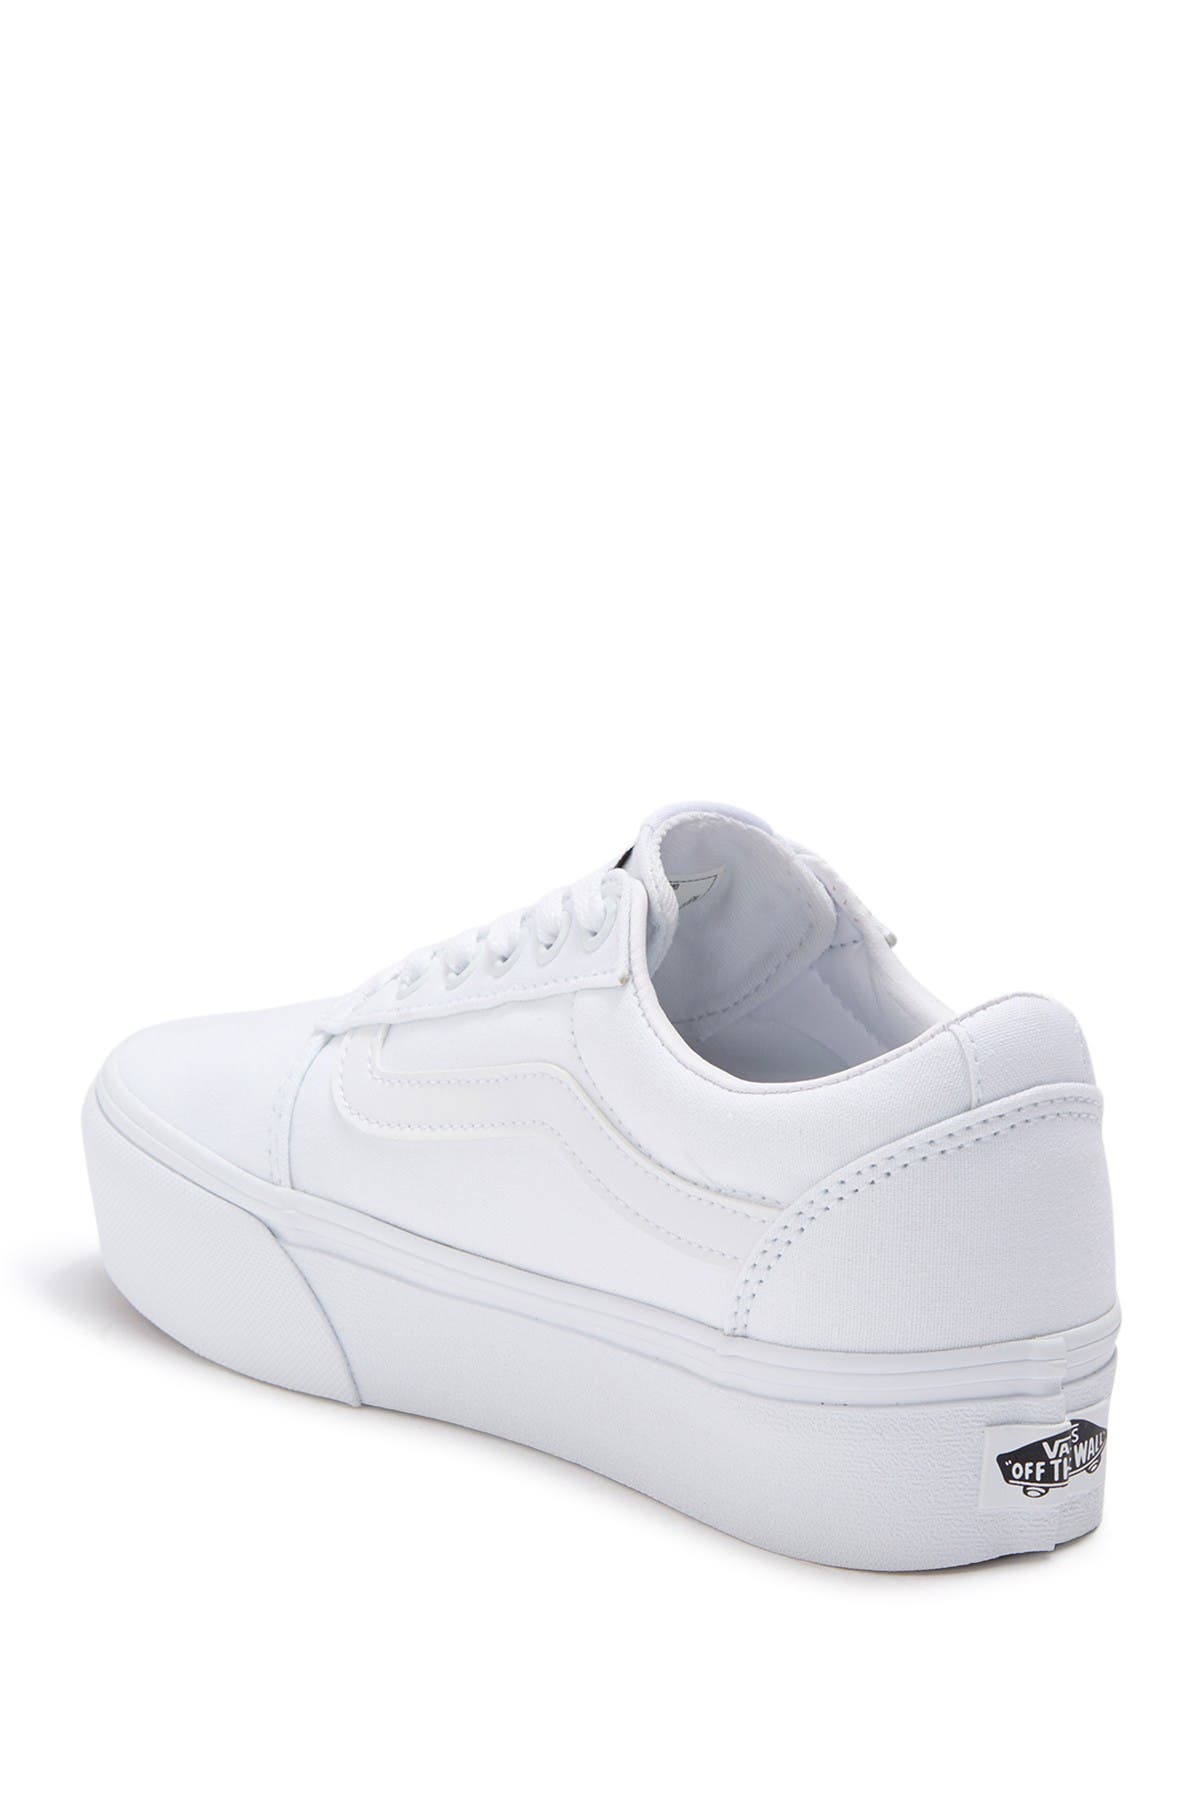 Vans Ward Platform Sneaker In White